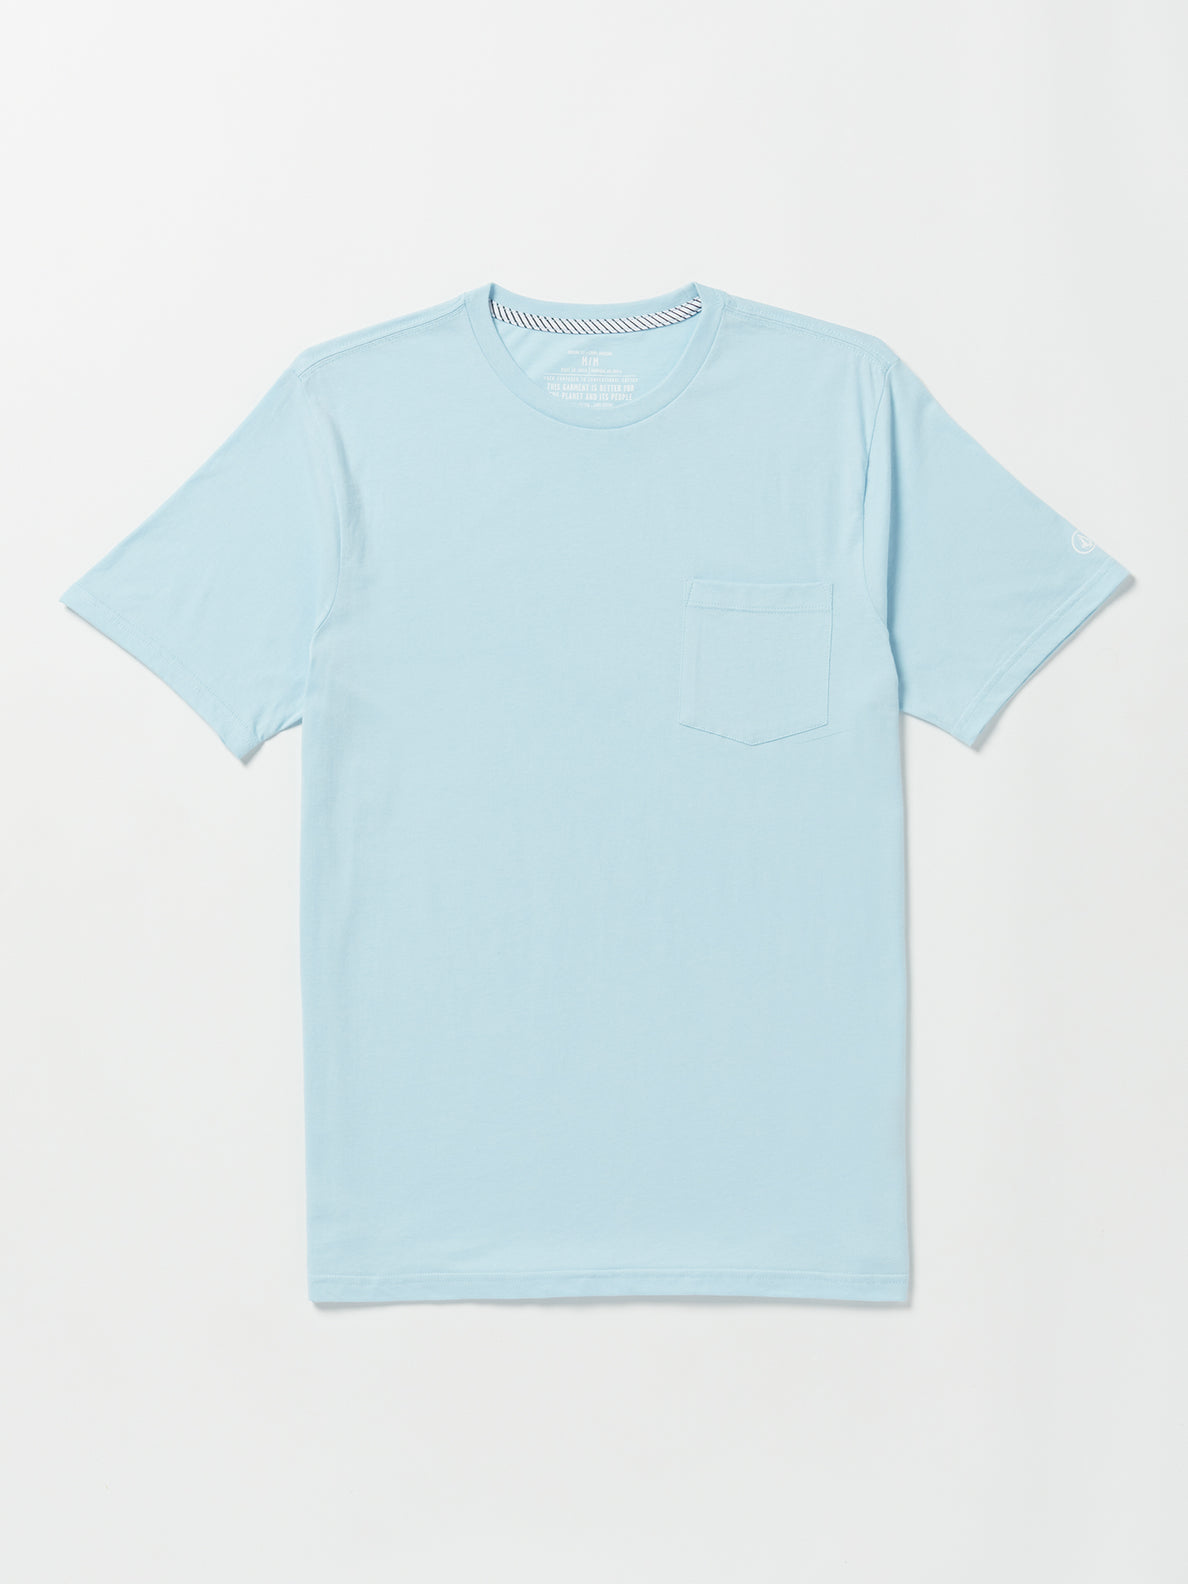 Solid Short Sleeve Pocket Tee - Misty Blue (A5042210_MYB) [F]